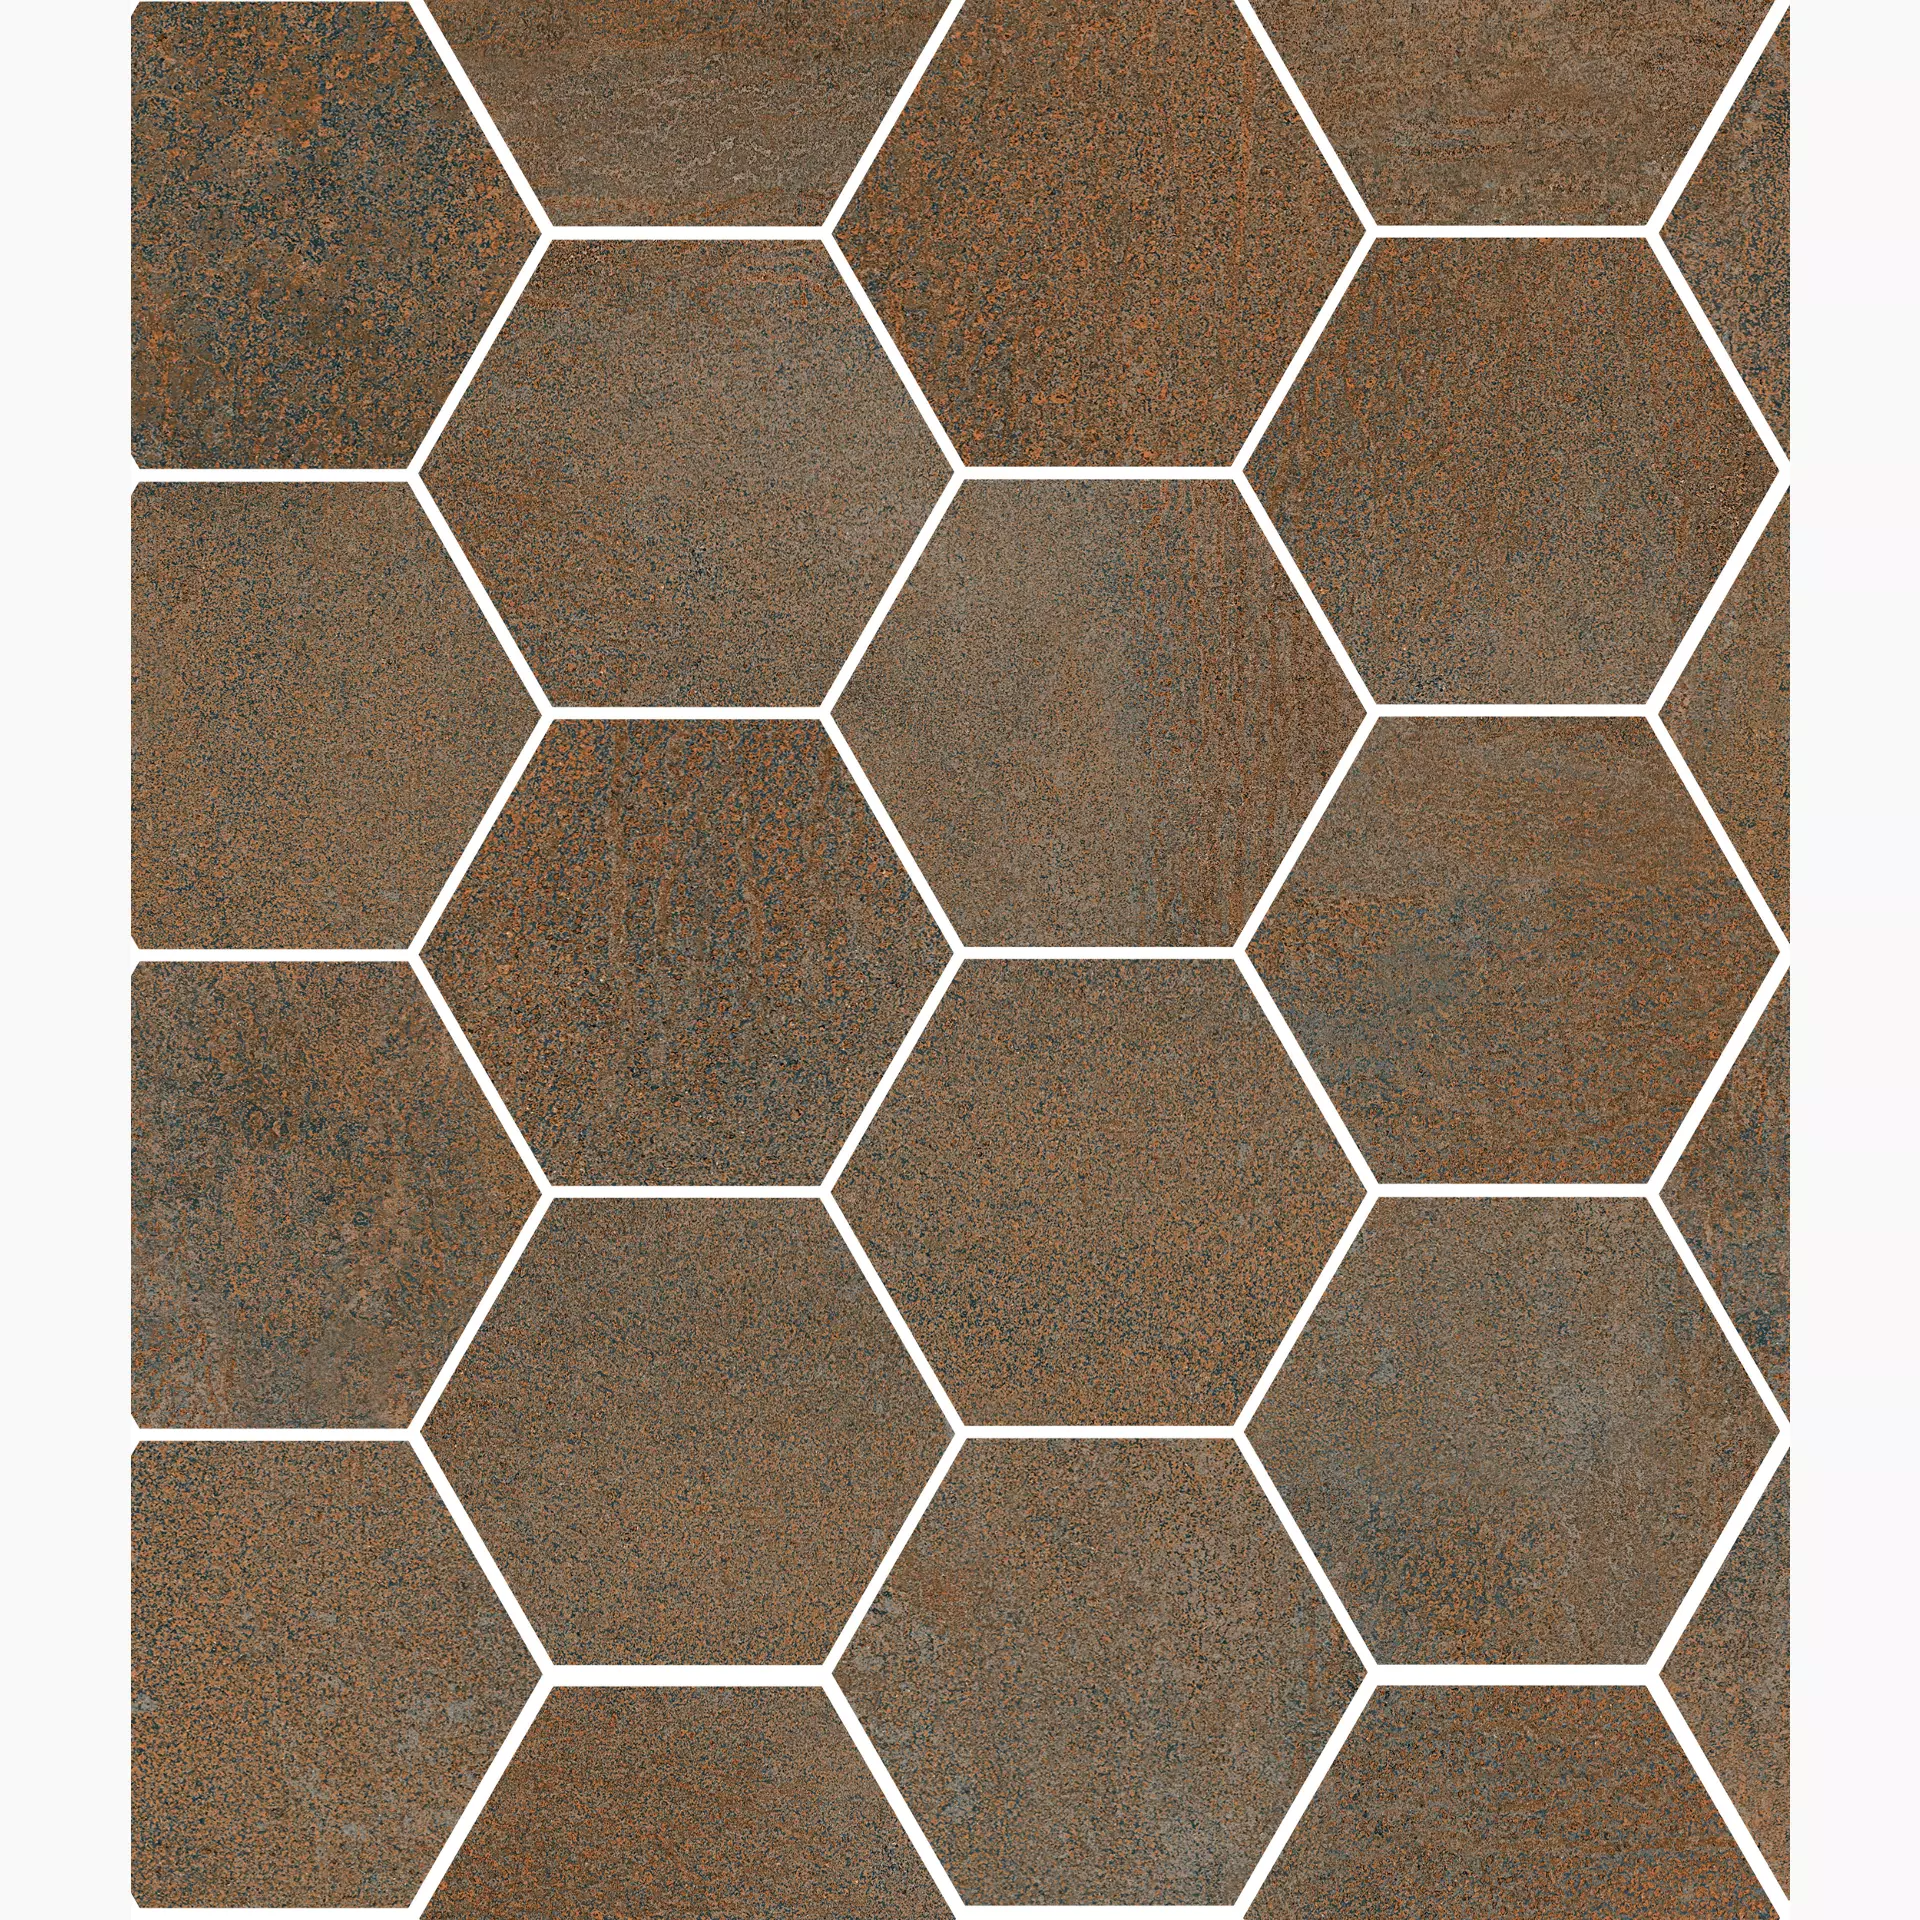 Sant Agostino Oxidart Copper Natural Hexagon CSAHOXCO26 26x30cm rectified 10mm